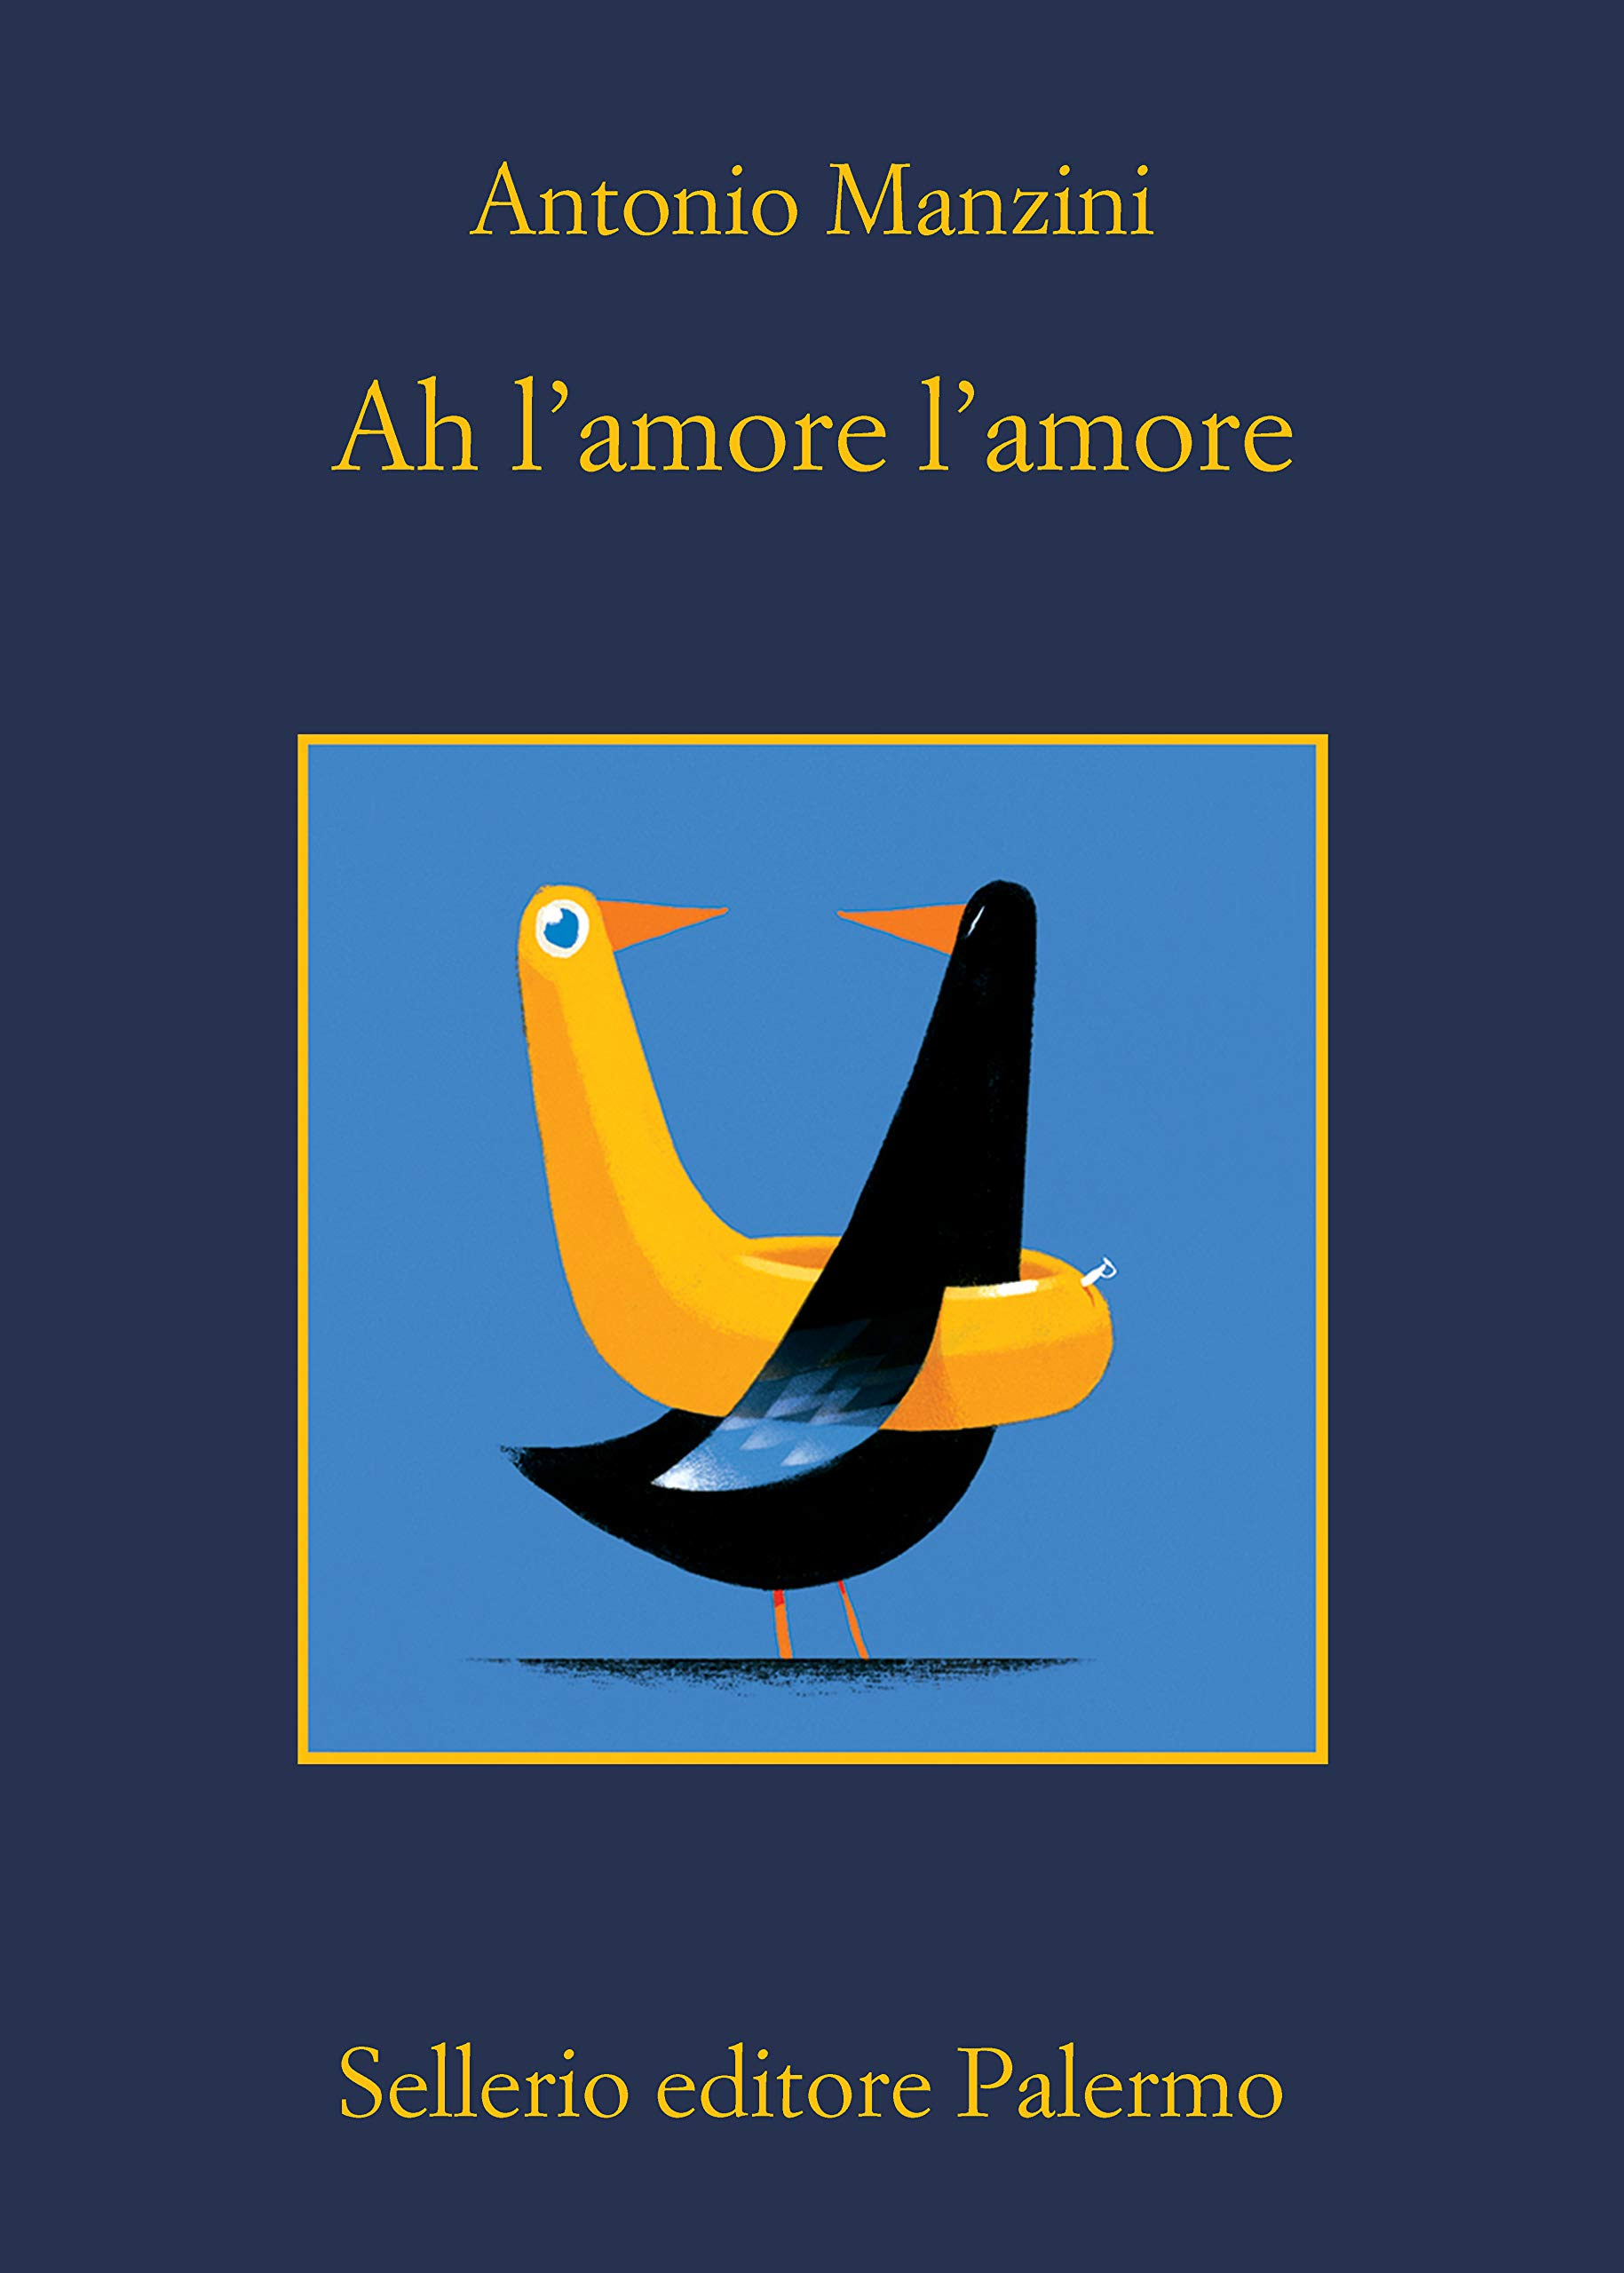 Ah l'amore l'amore in Kindle/PDF/EPUB